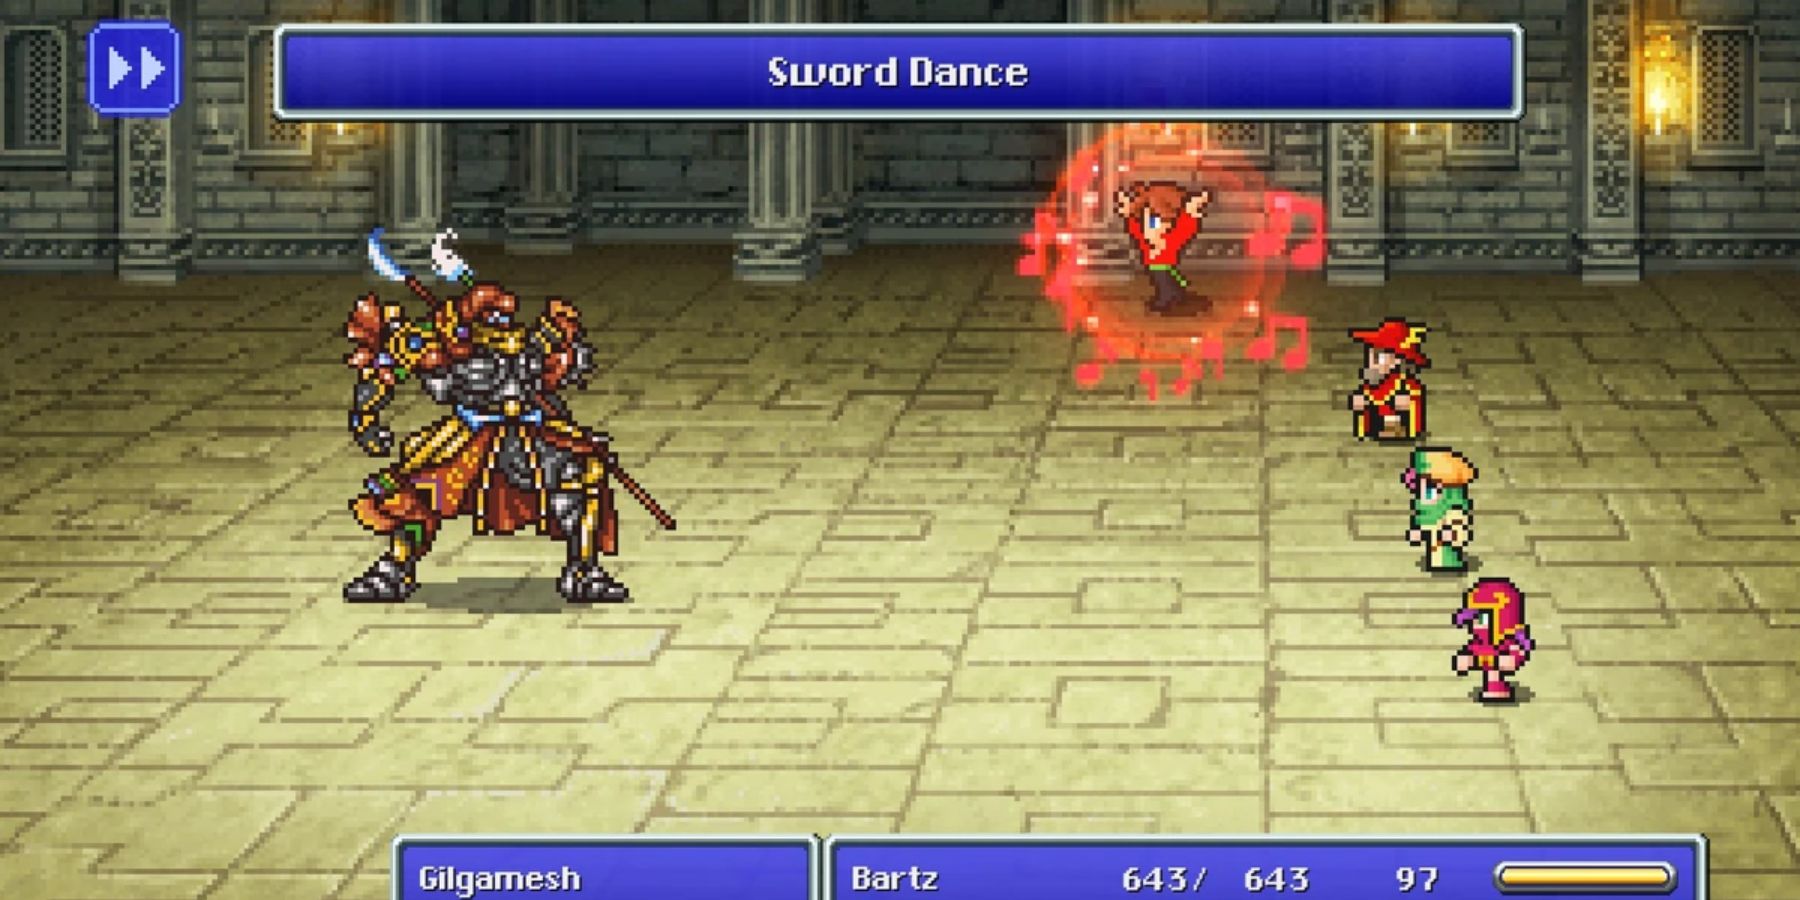 Bartz using the Sword Dance attack in Final Fantasy 5